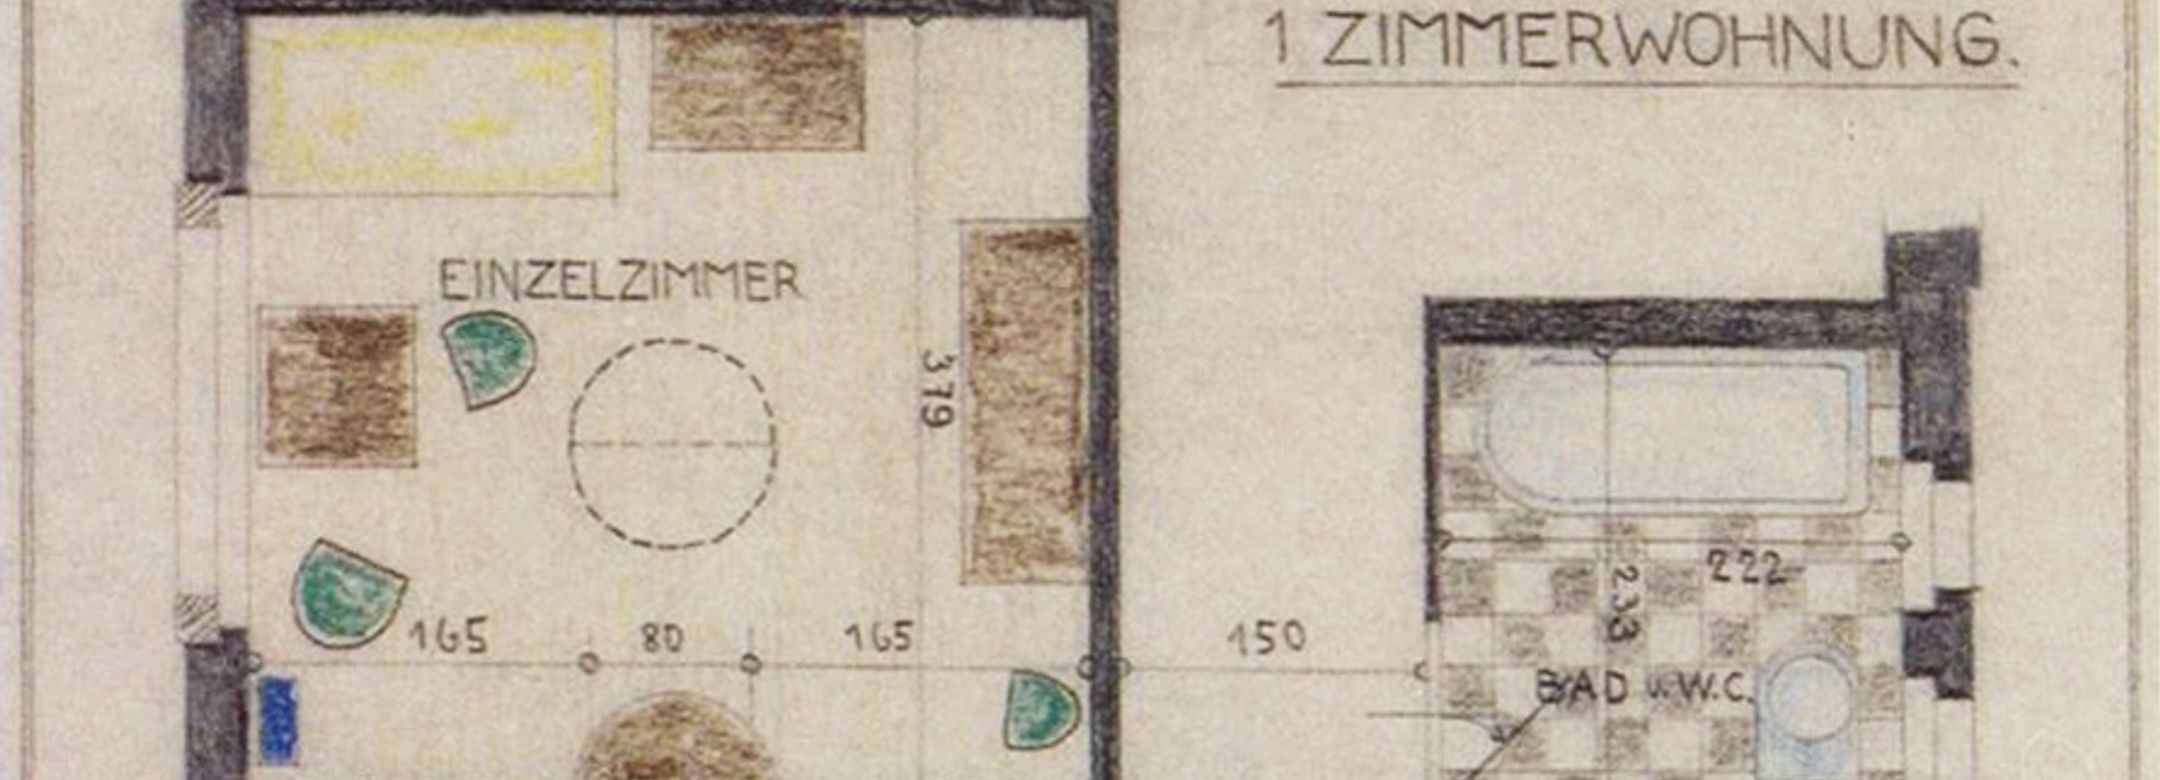 Floorplan of single-room apartment, Housing Cooperative for Working Women, Zurich (1926)